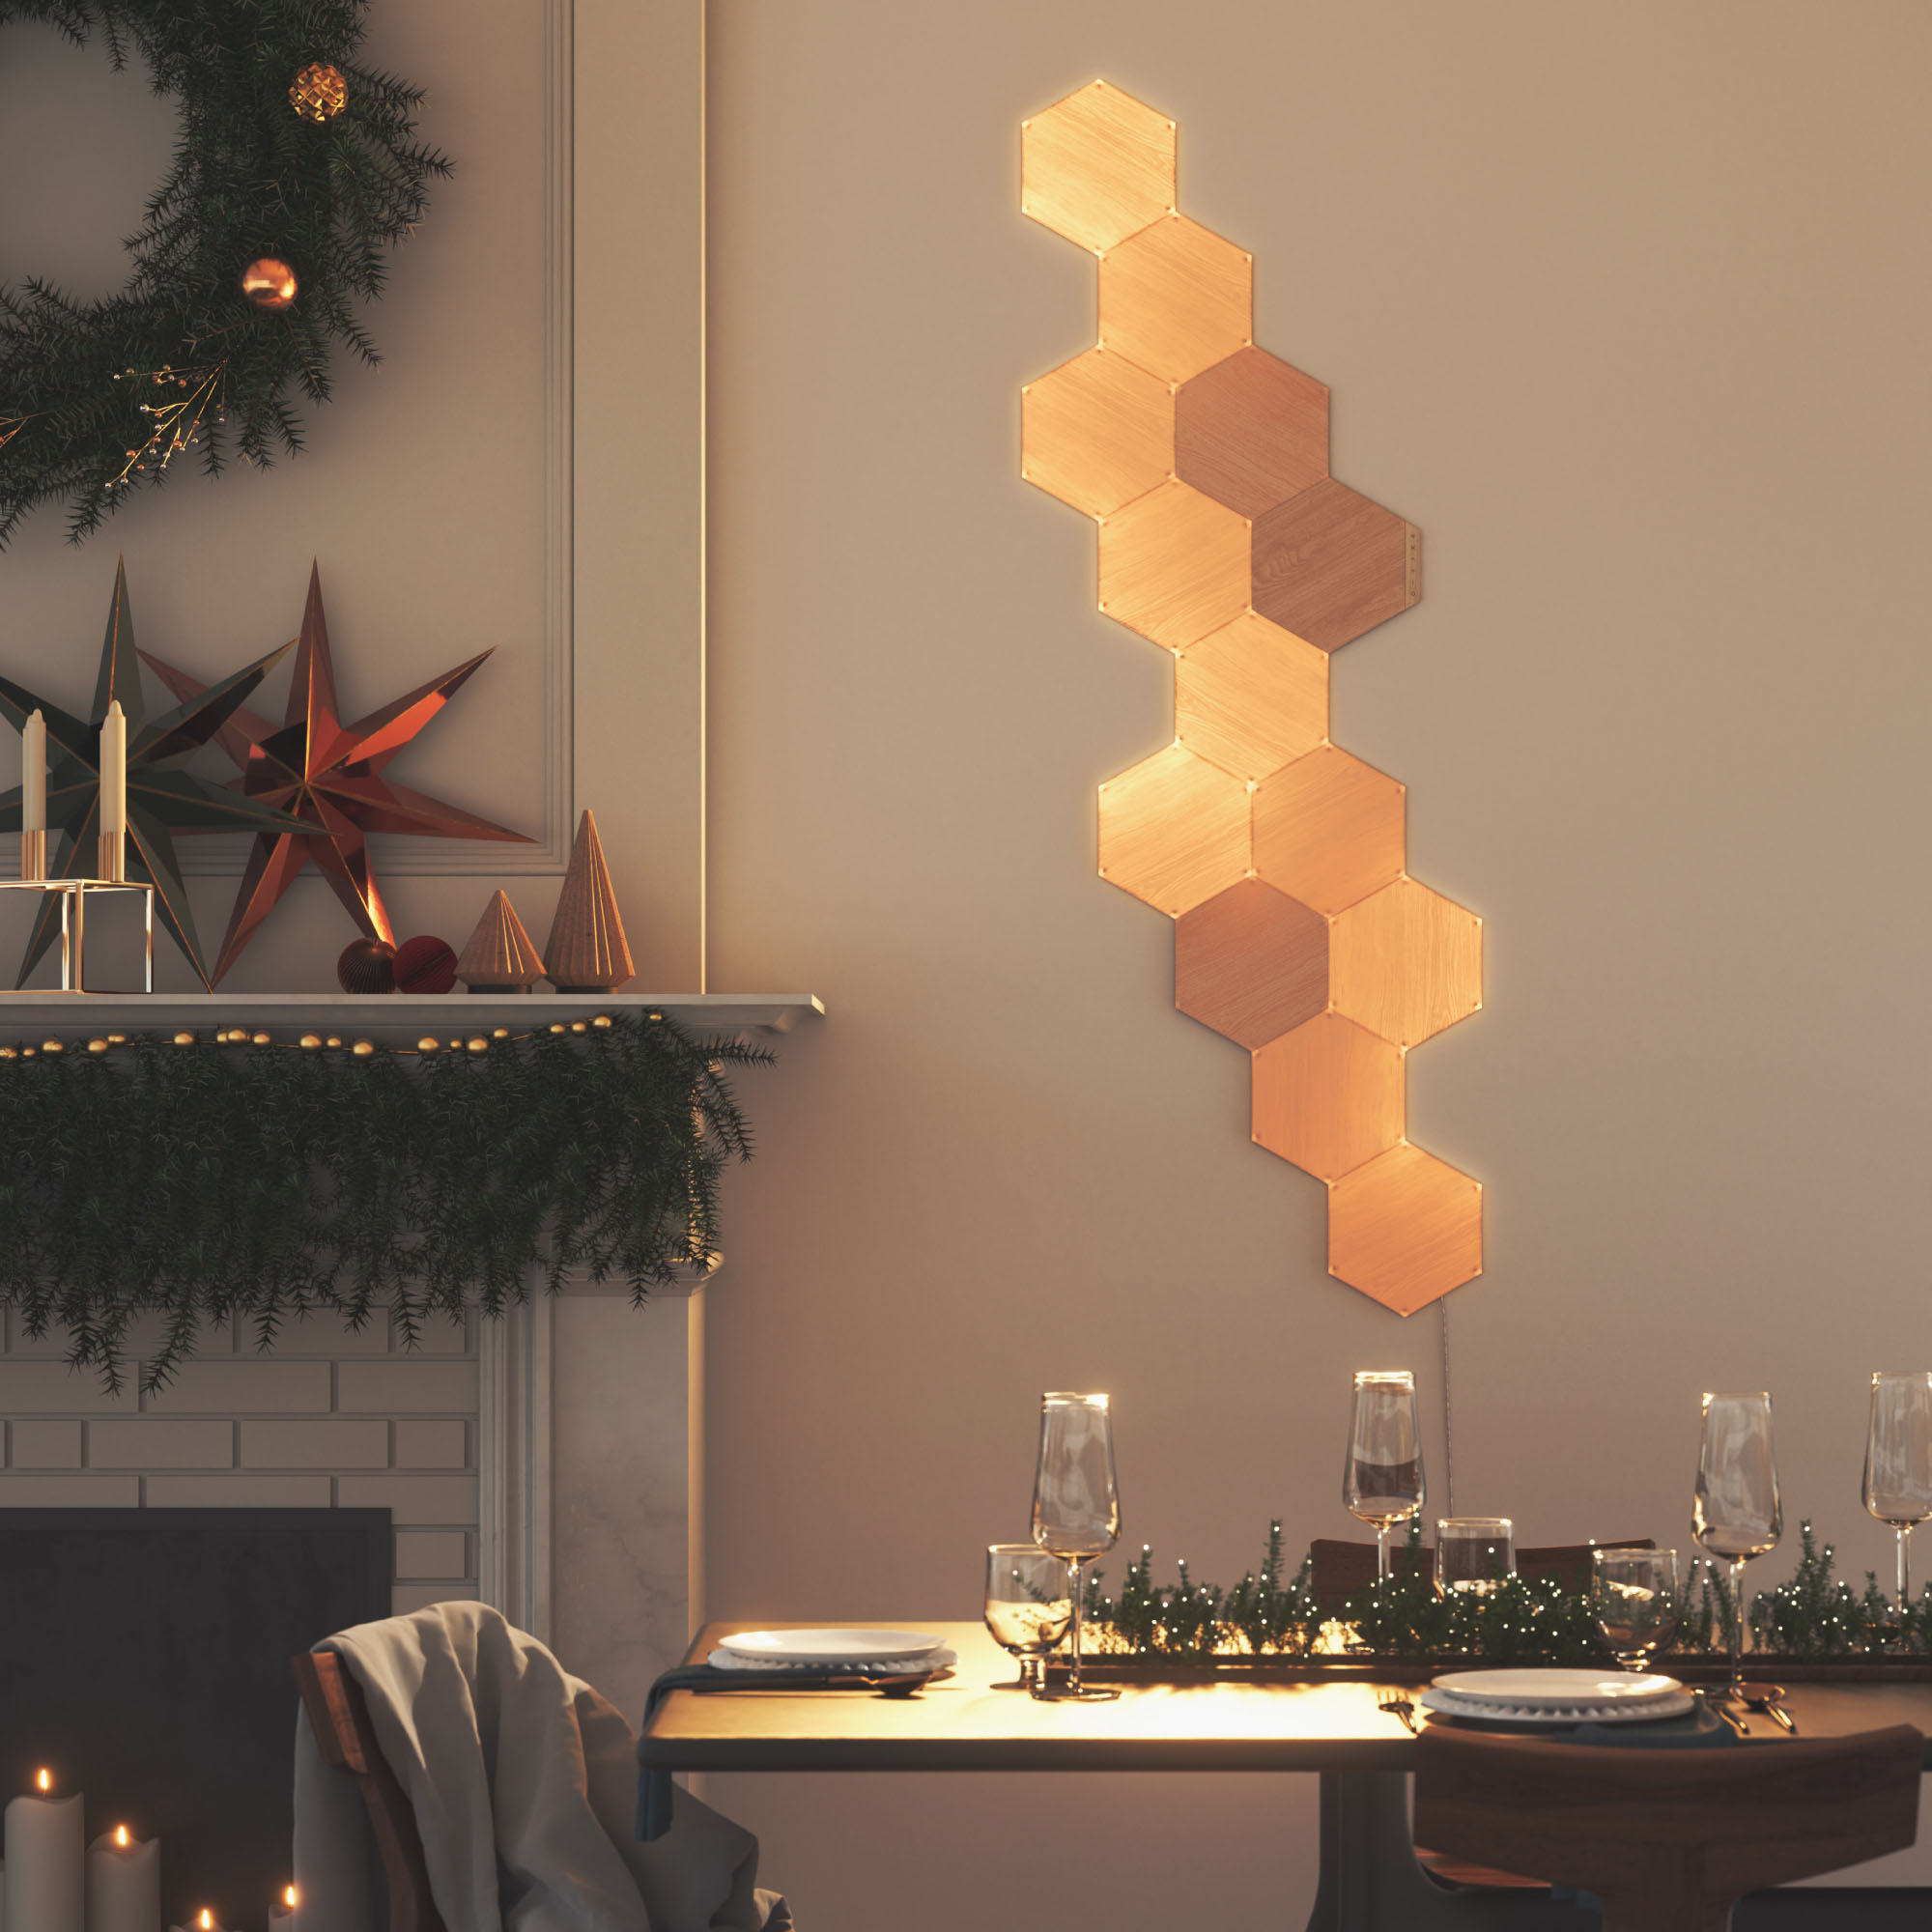 Nanoleaf 7 Panels Wooden Hexagon Smarter Kit Led Light Bulbs : Target